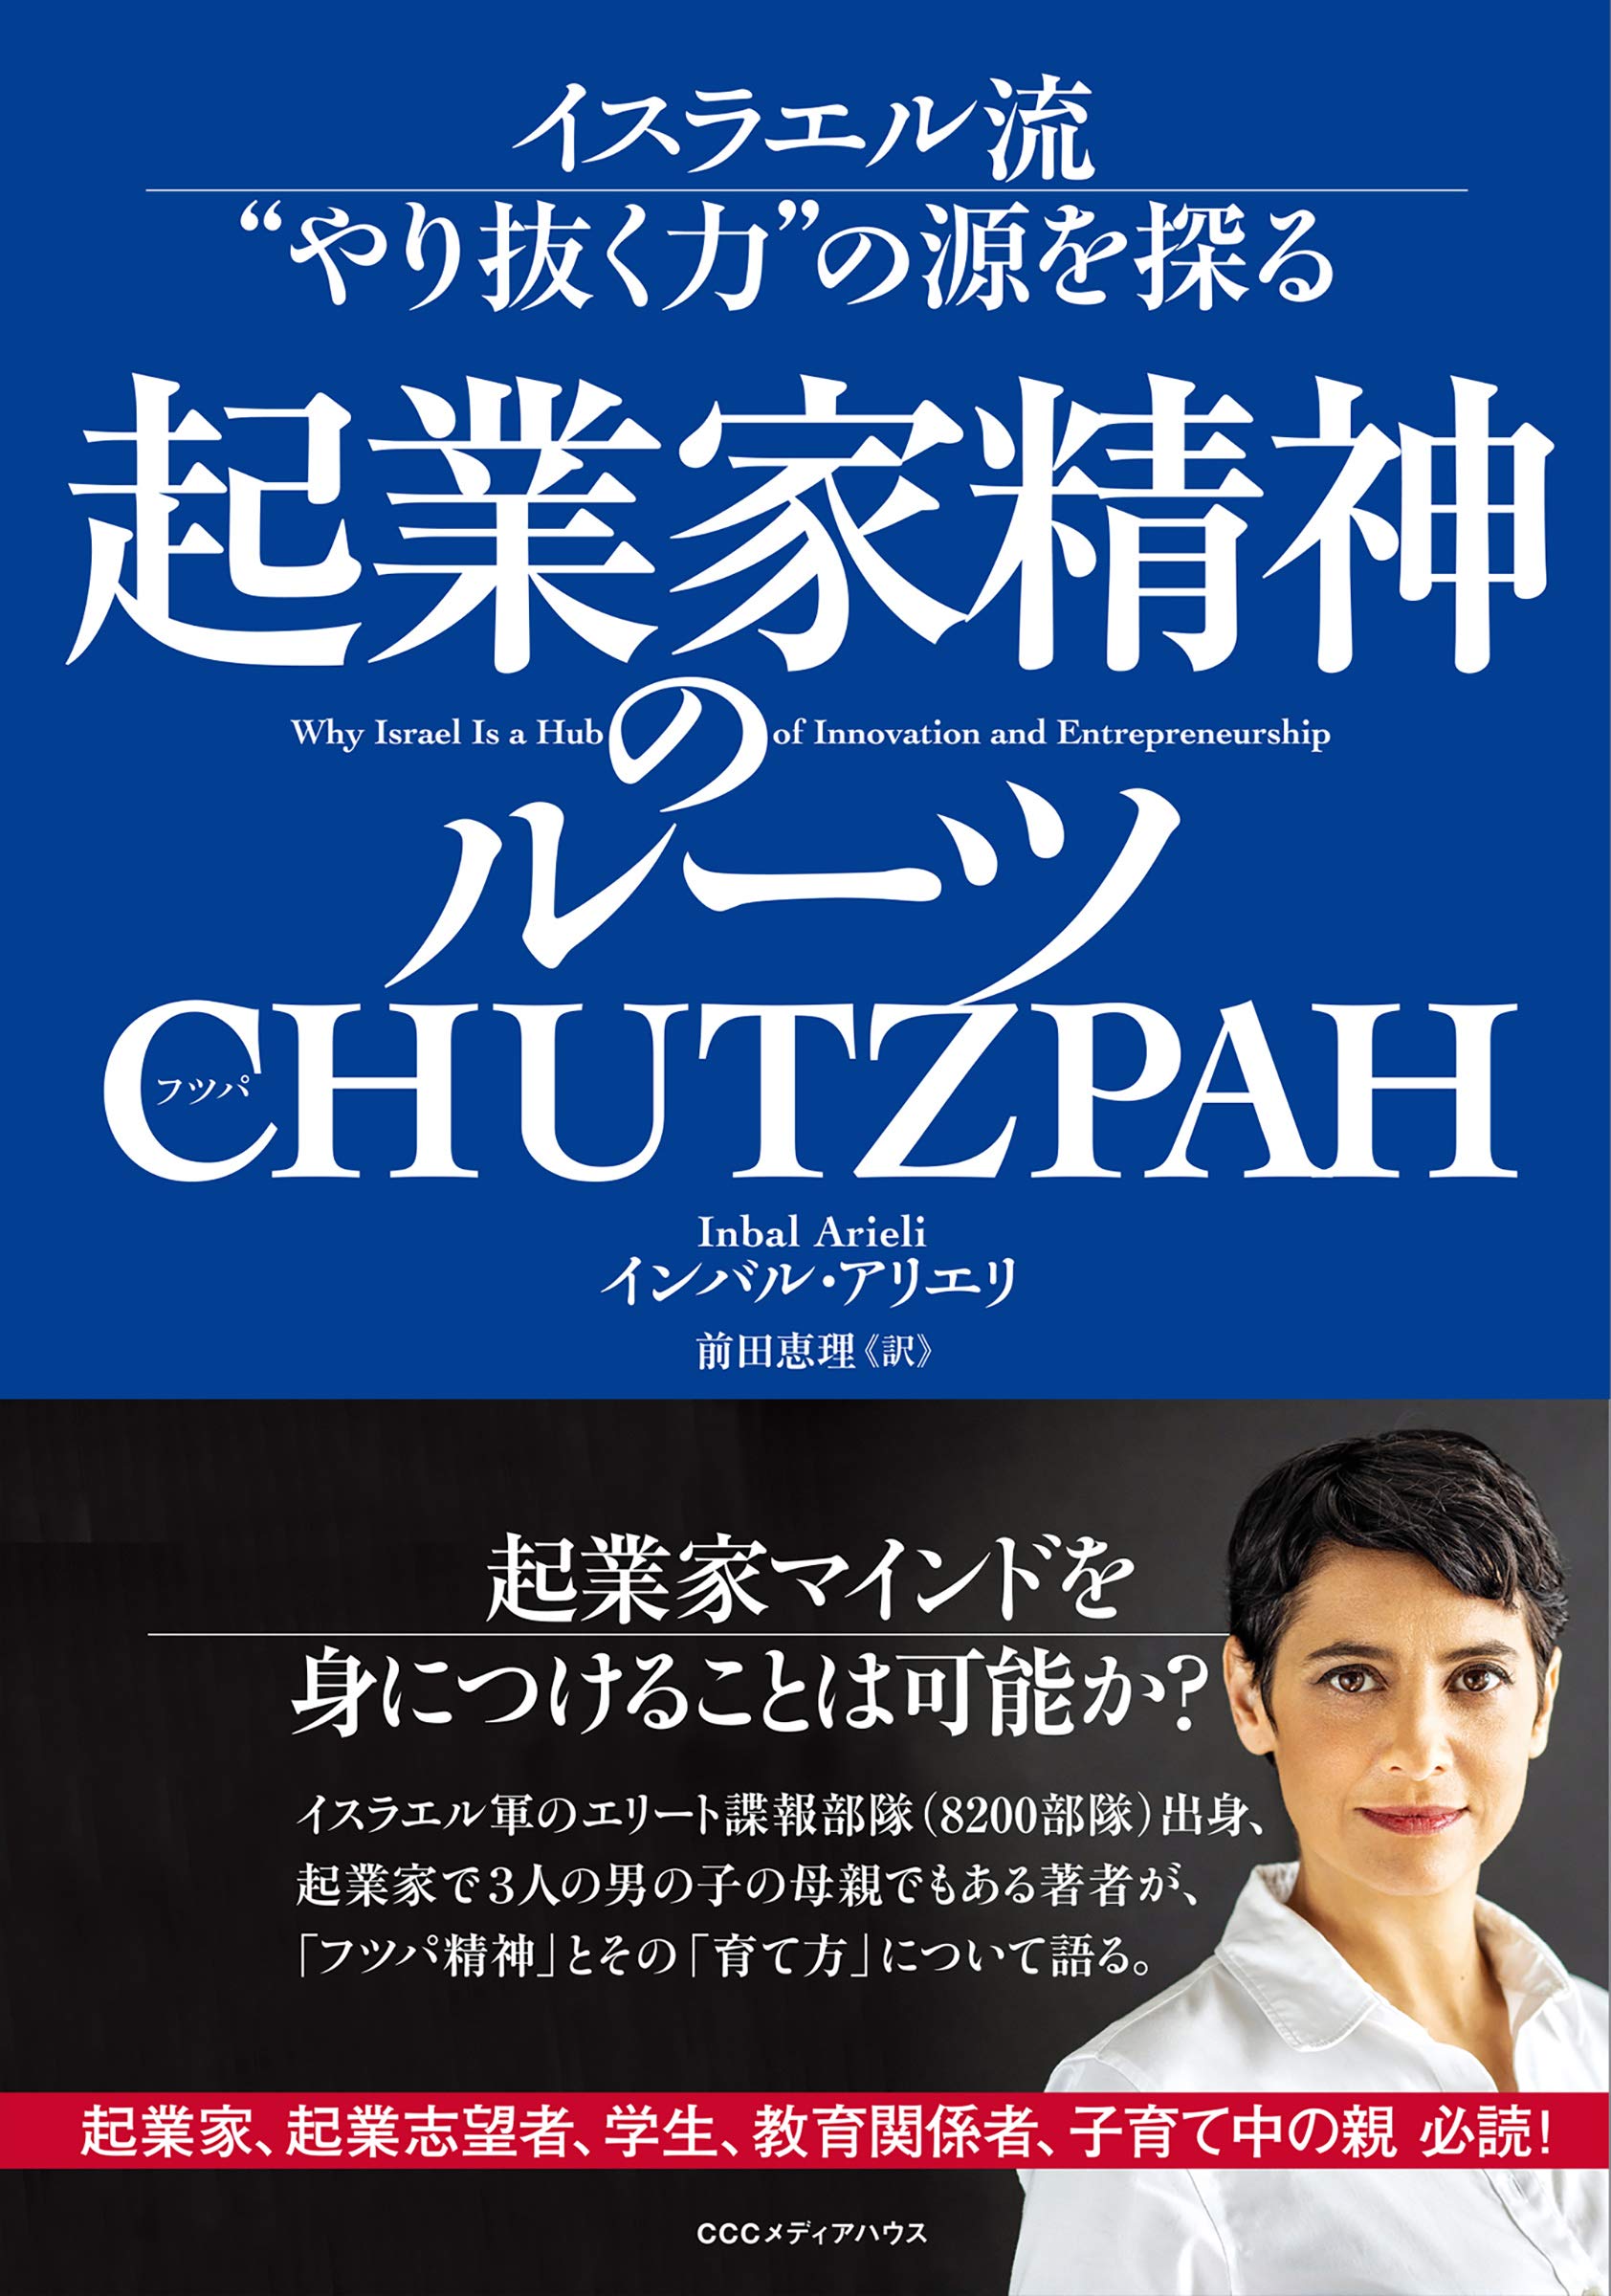 The Chutzpah Dictionary's Five Signature Business Principles